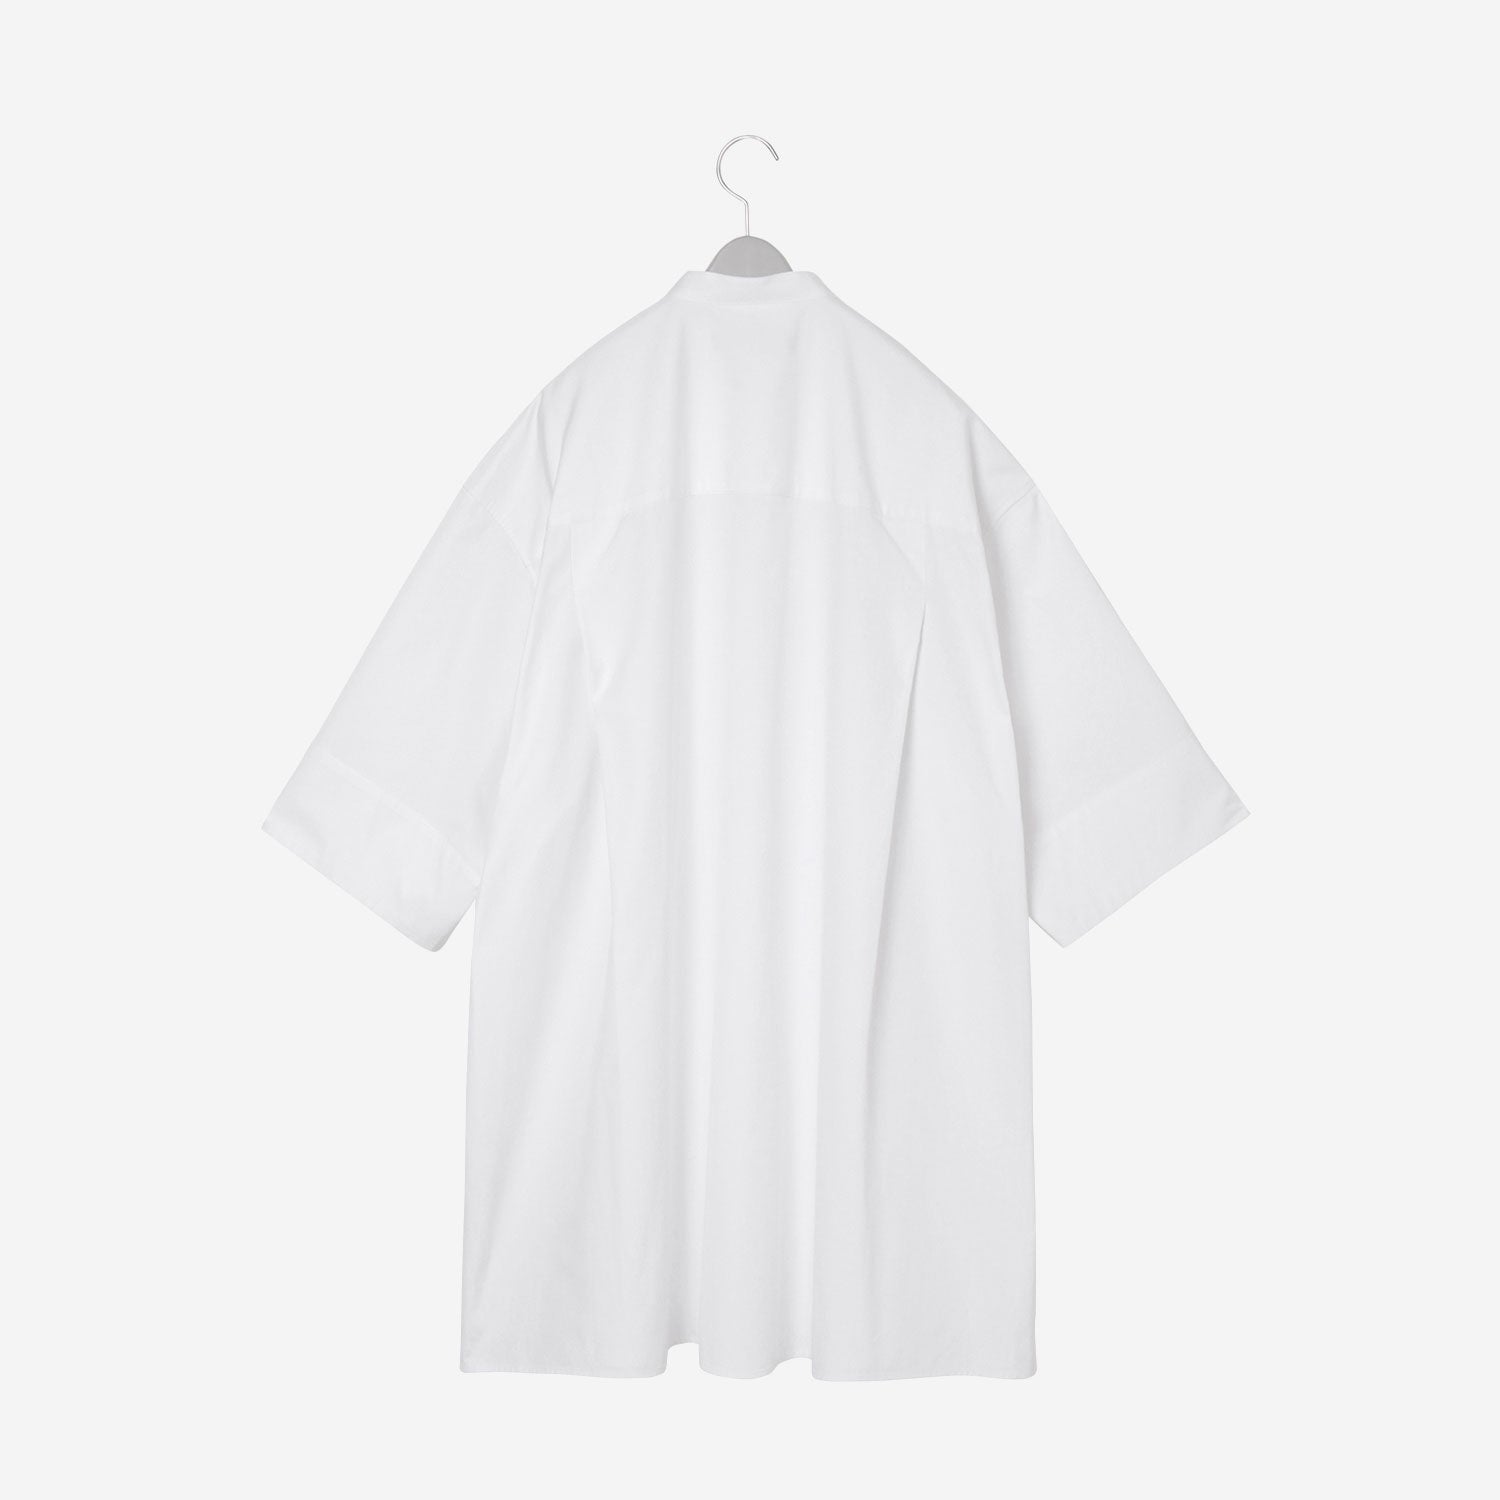 Band collar Shirt / white